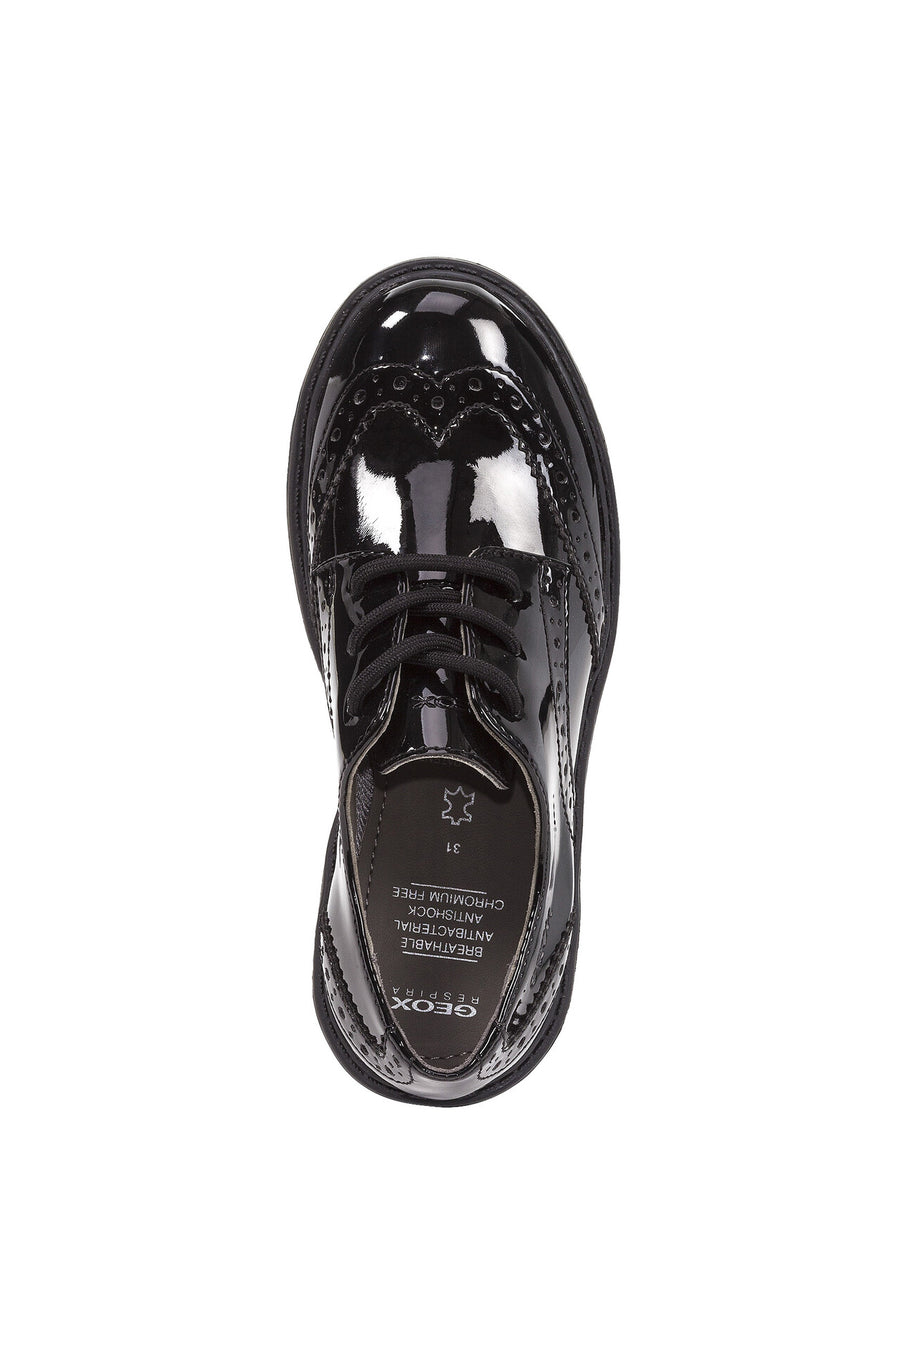 Geox School Shoes | Casey Lace Brogue | Patent Black